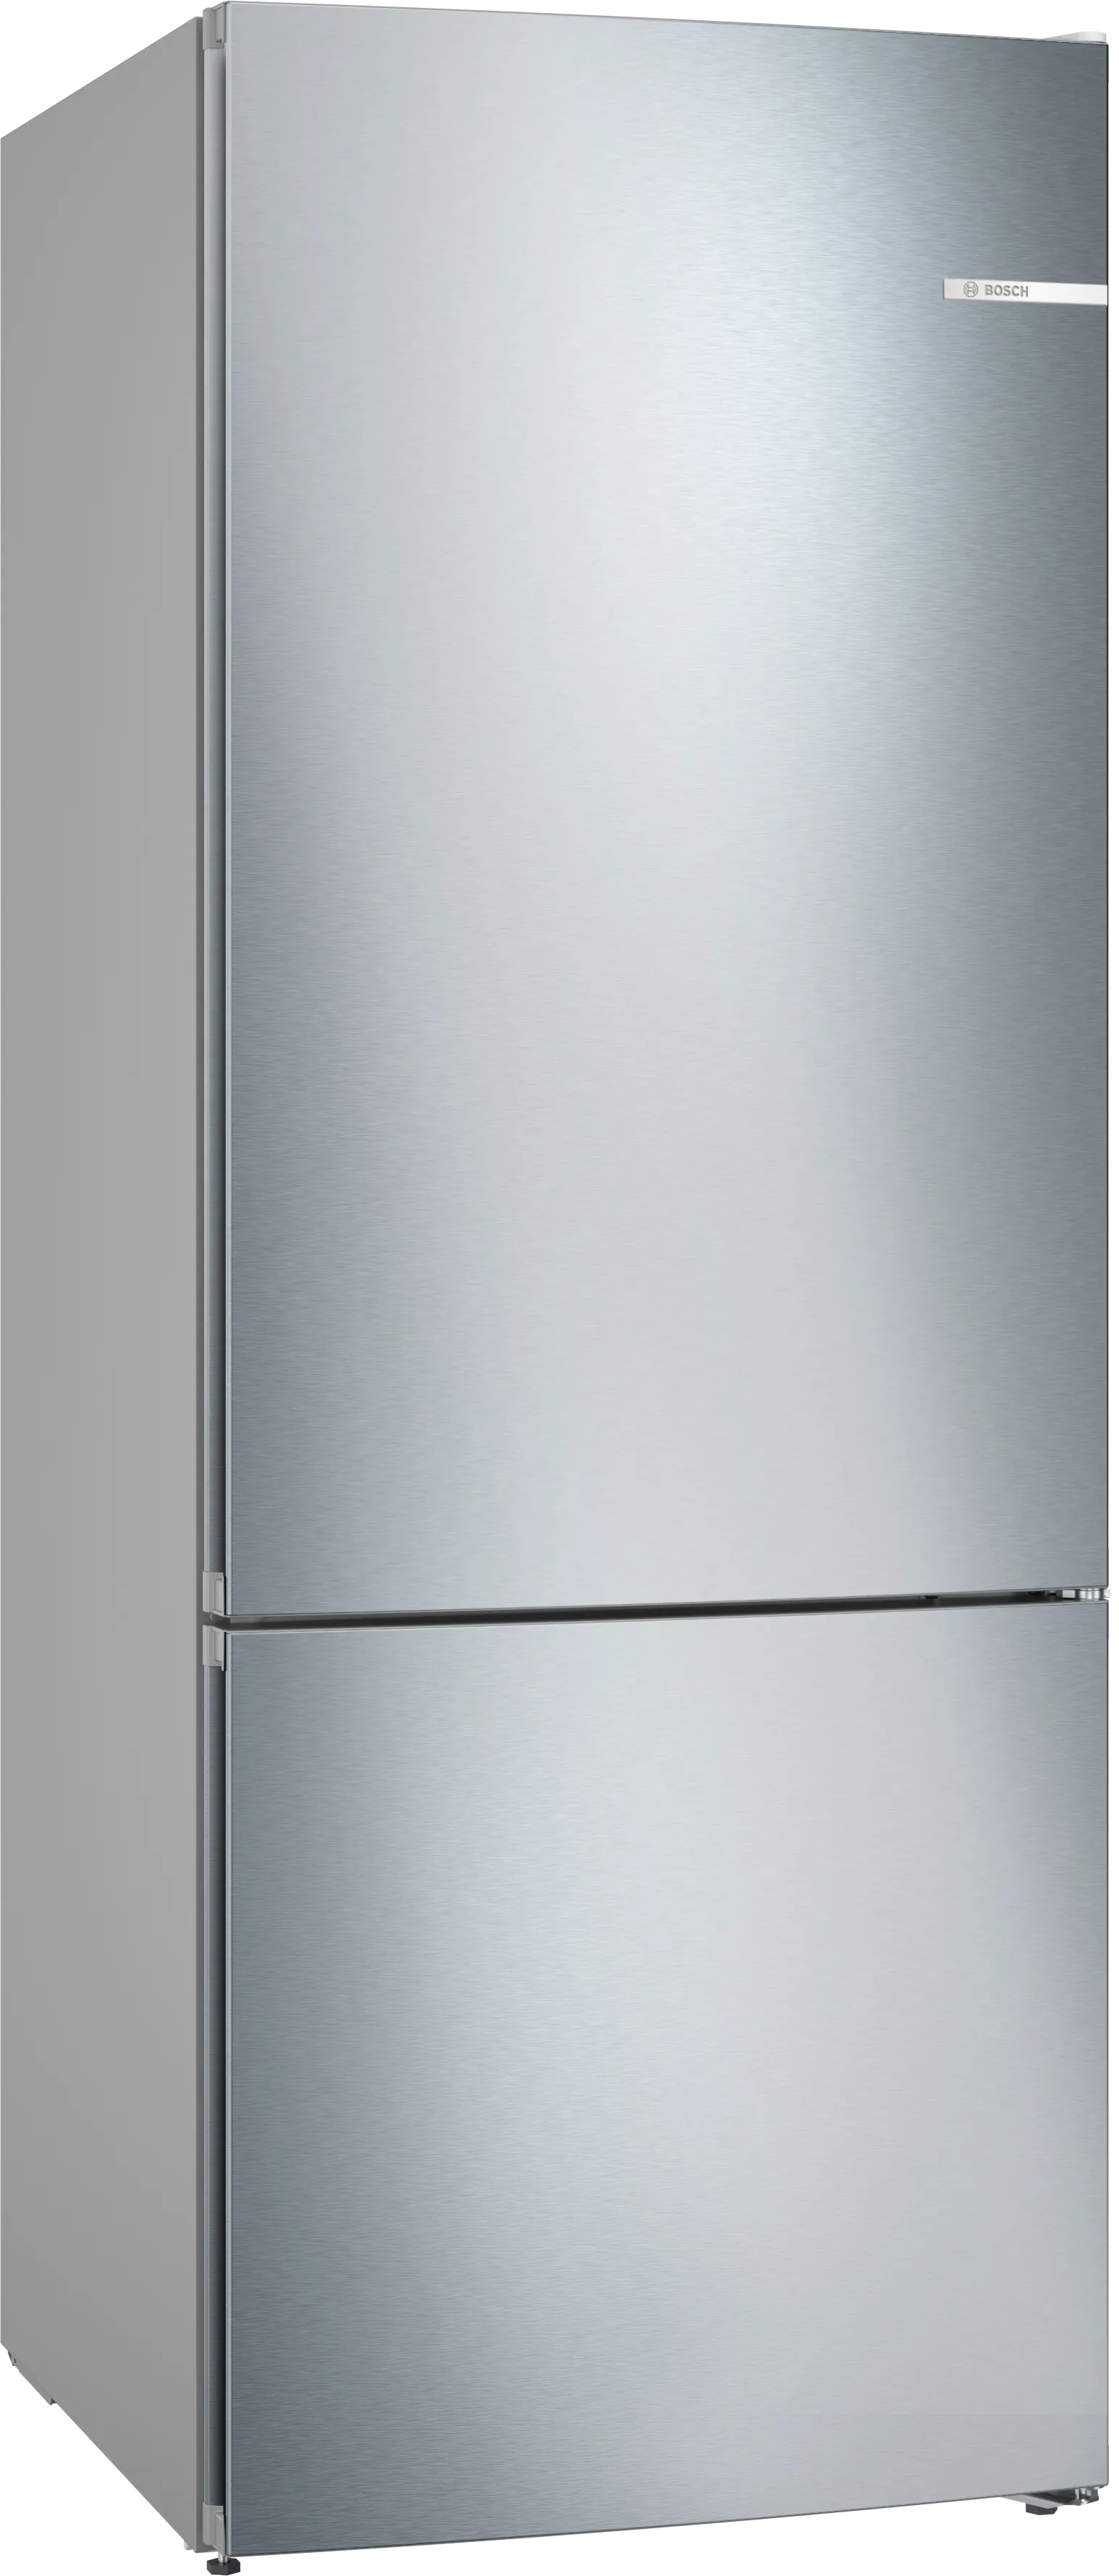 Series 4 free-standing fridge-freezer with freezer at bottom 186 x 70 cm Stainless steel (with anti-fingerprint) 